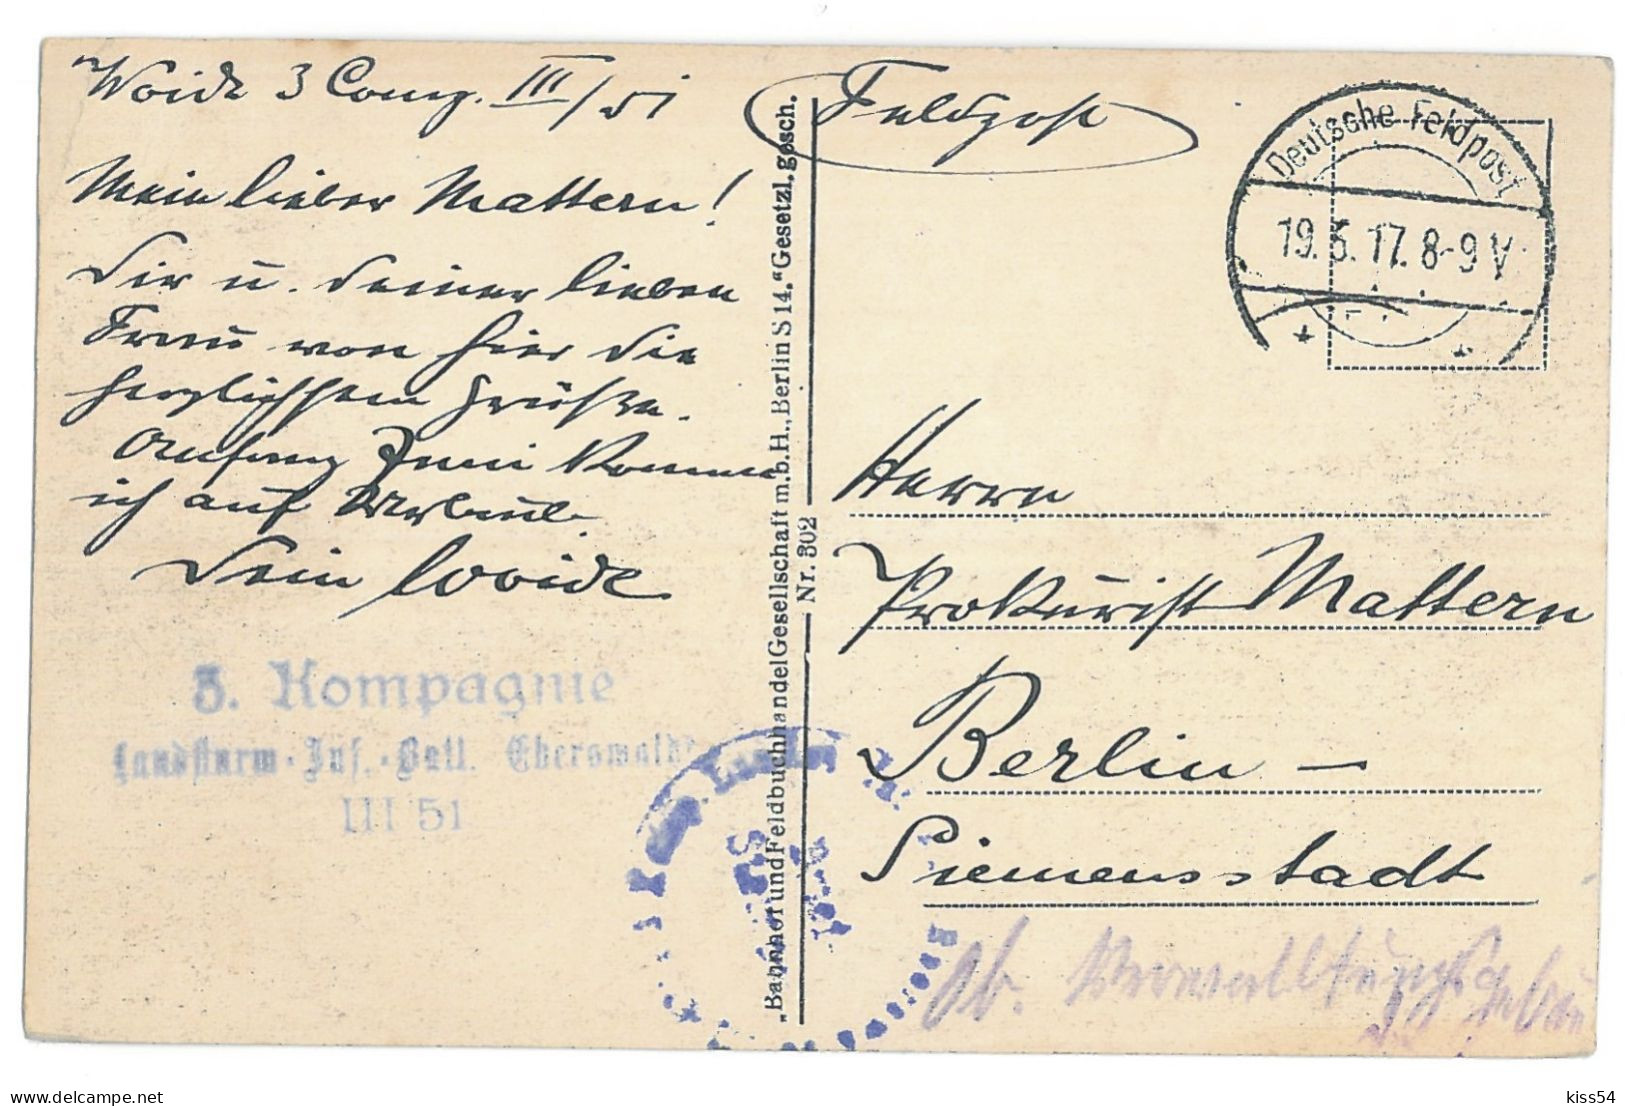 RO 97 - 14089 BUCURESTI, Theatre Market, Romania - Old Postcard, CENSOR - Used - 1917 - Rumänien